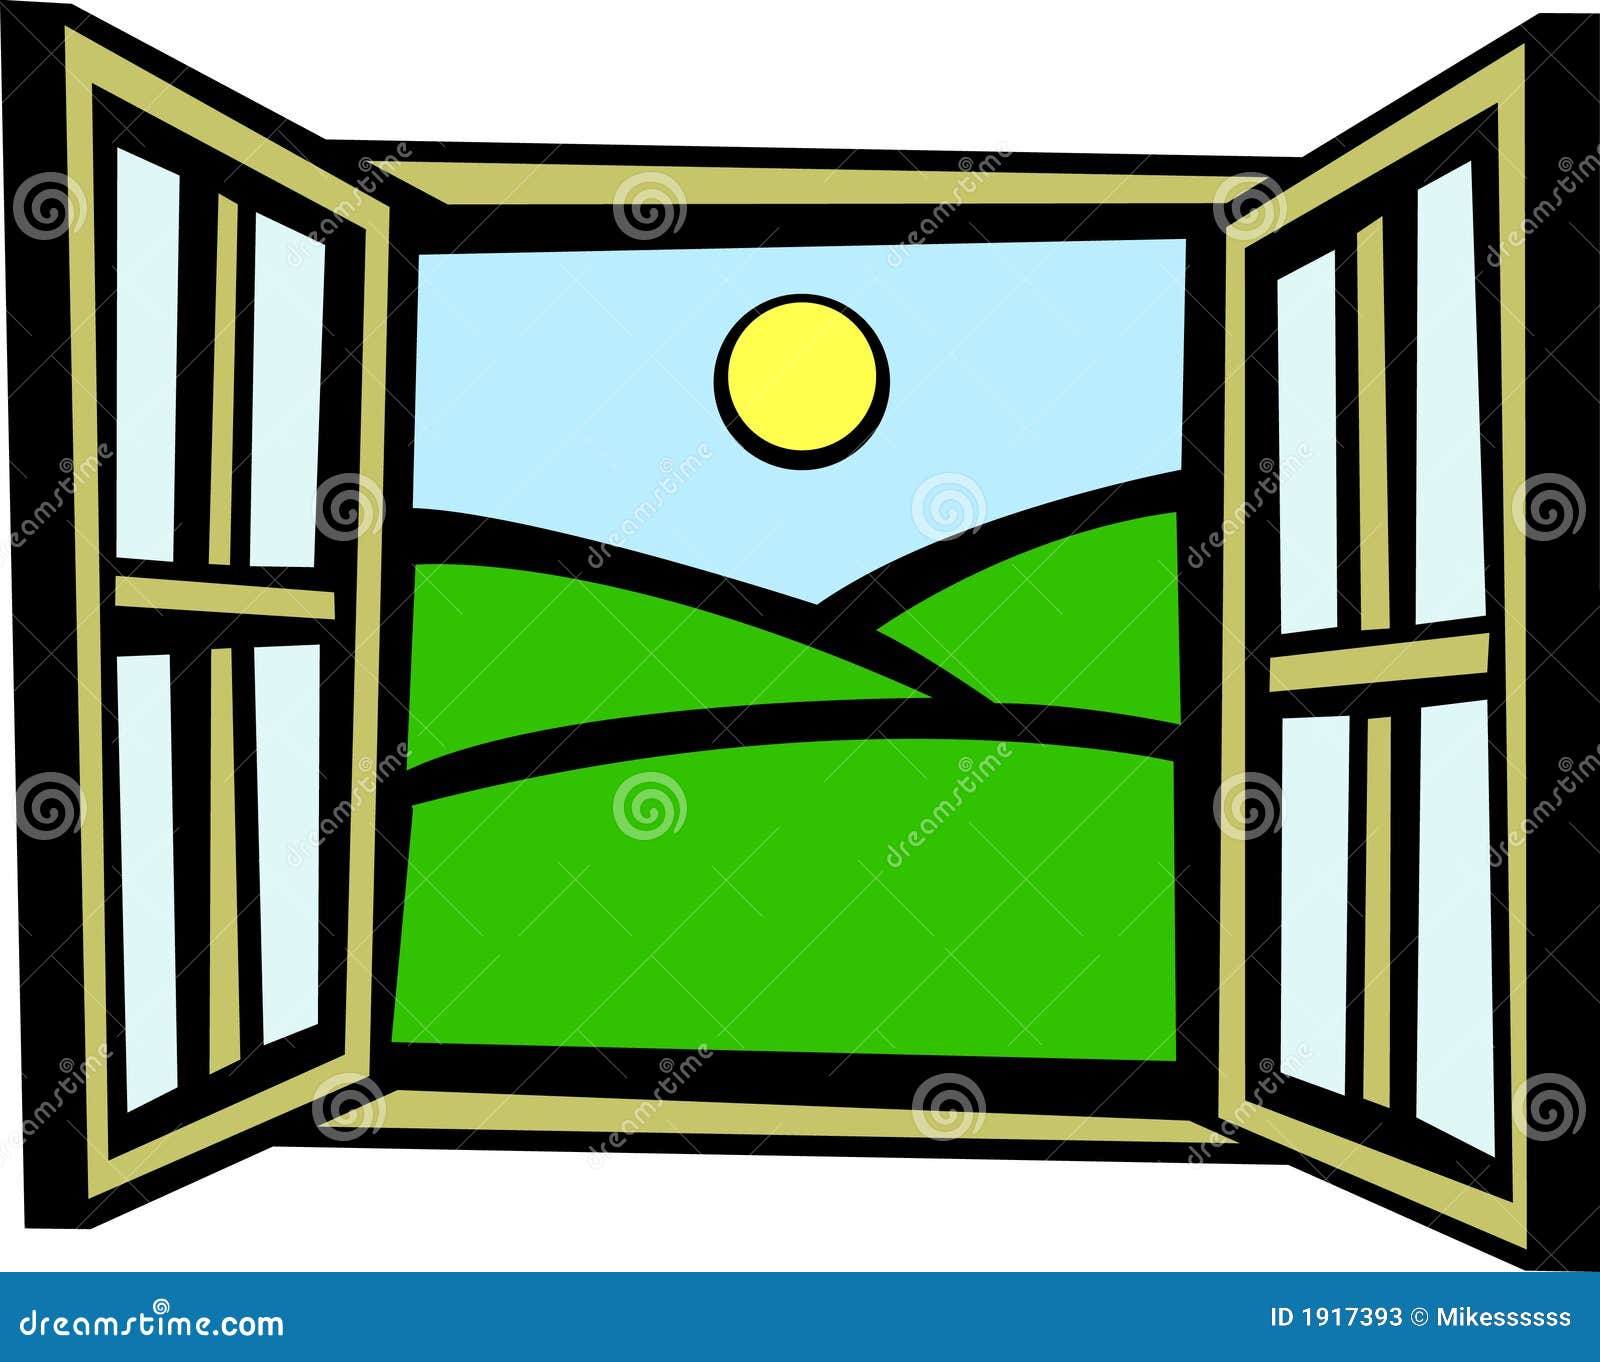 windows clip art animation - photo #26